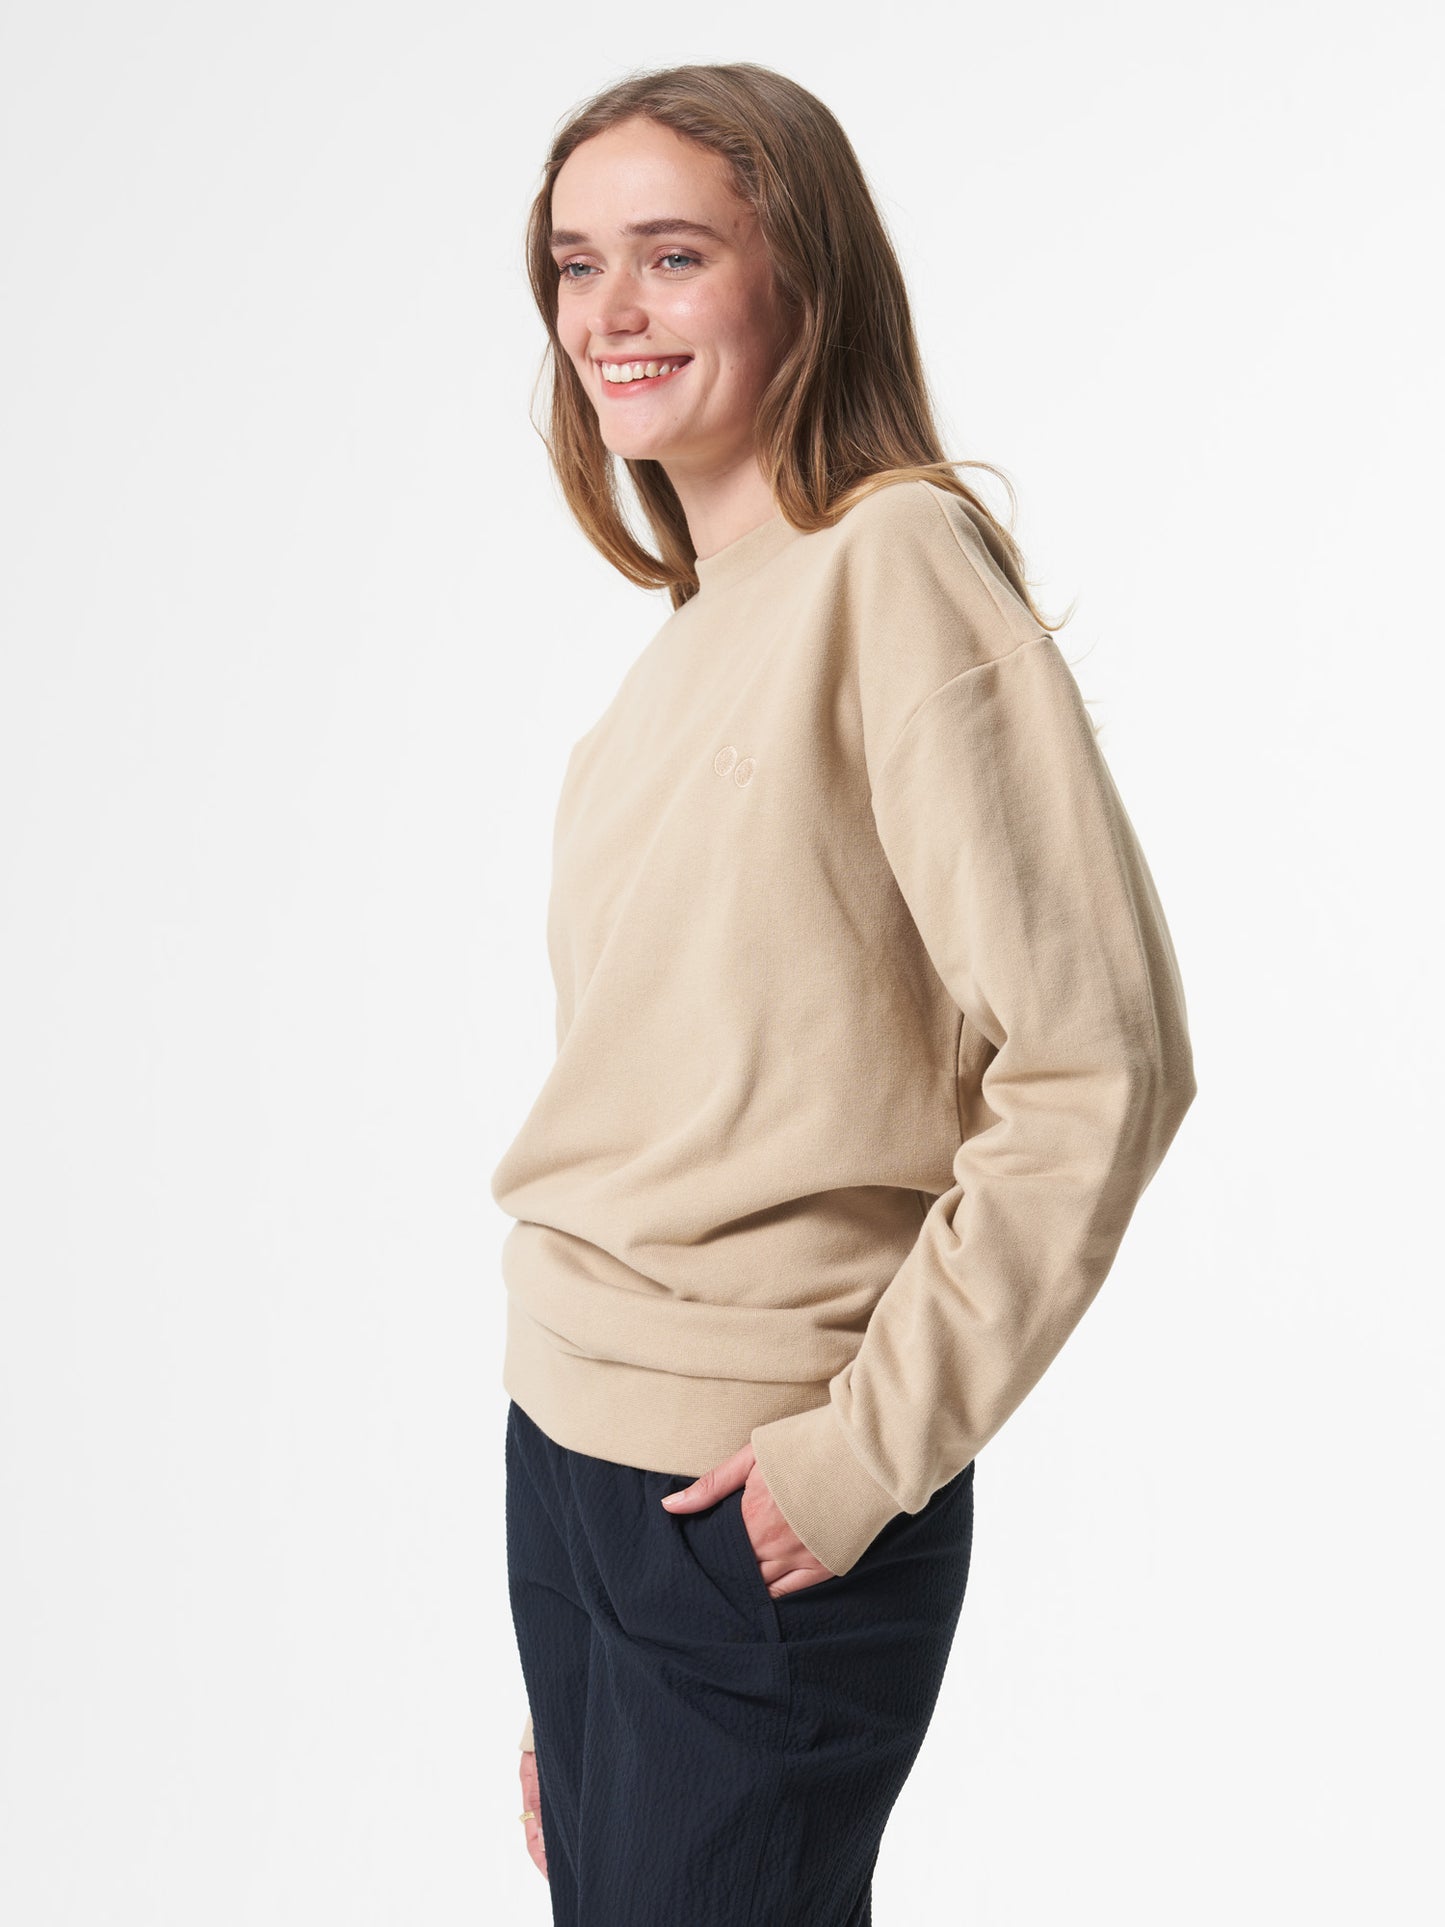 pinqponq-Sweatshirt-Caramel-Khaki-model-side